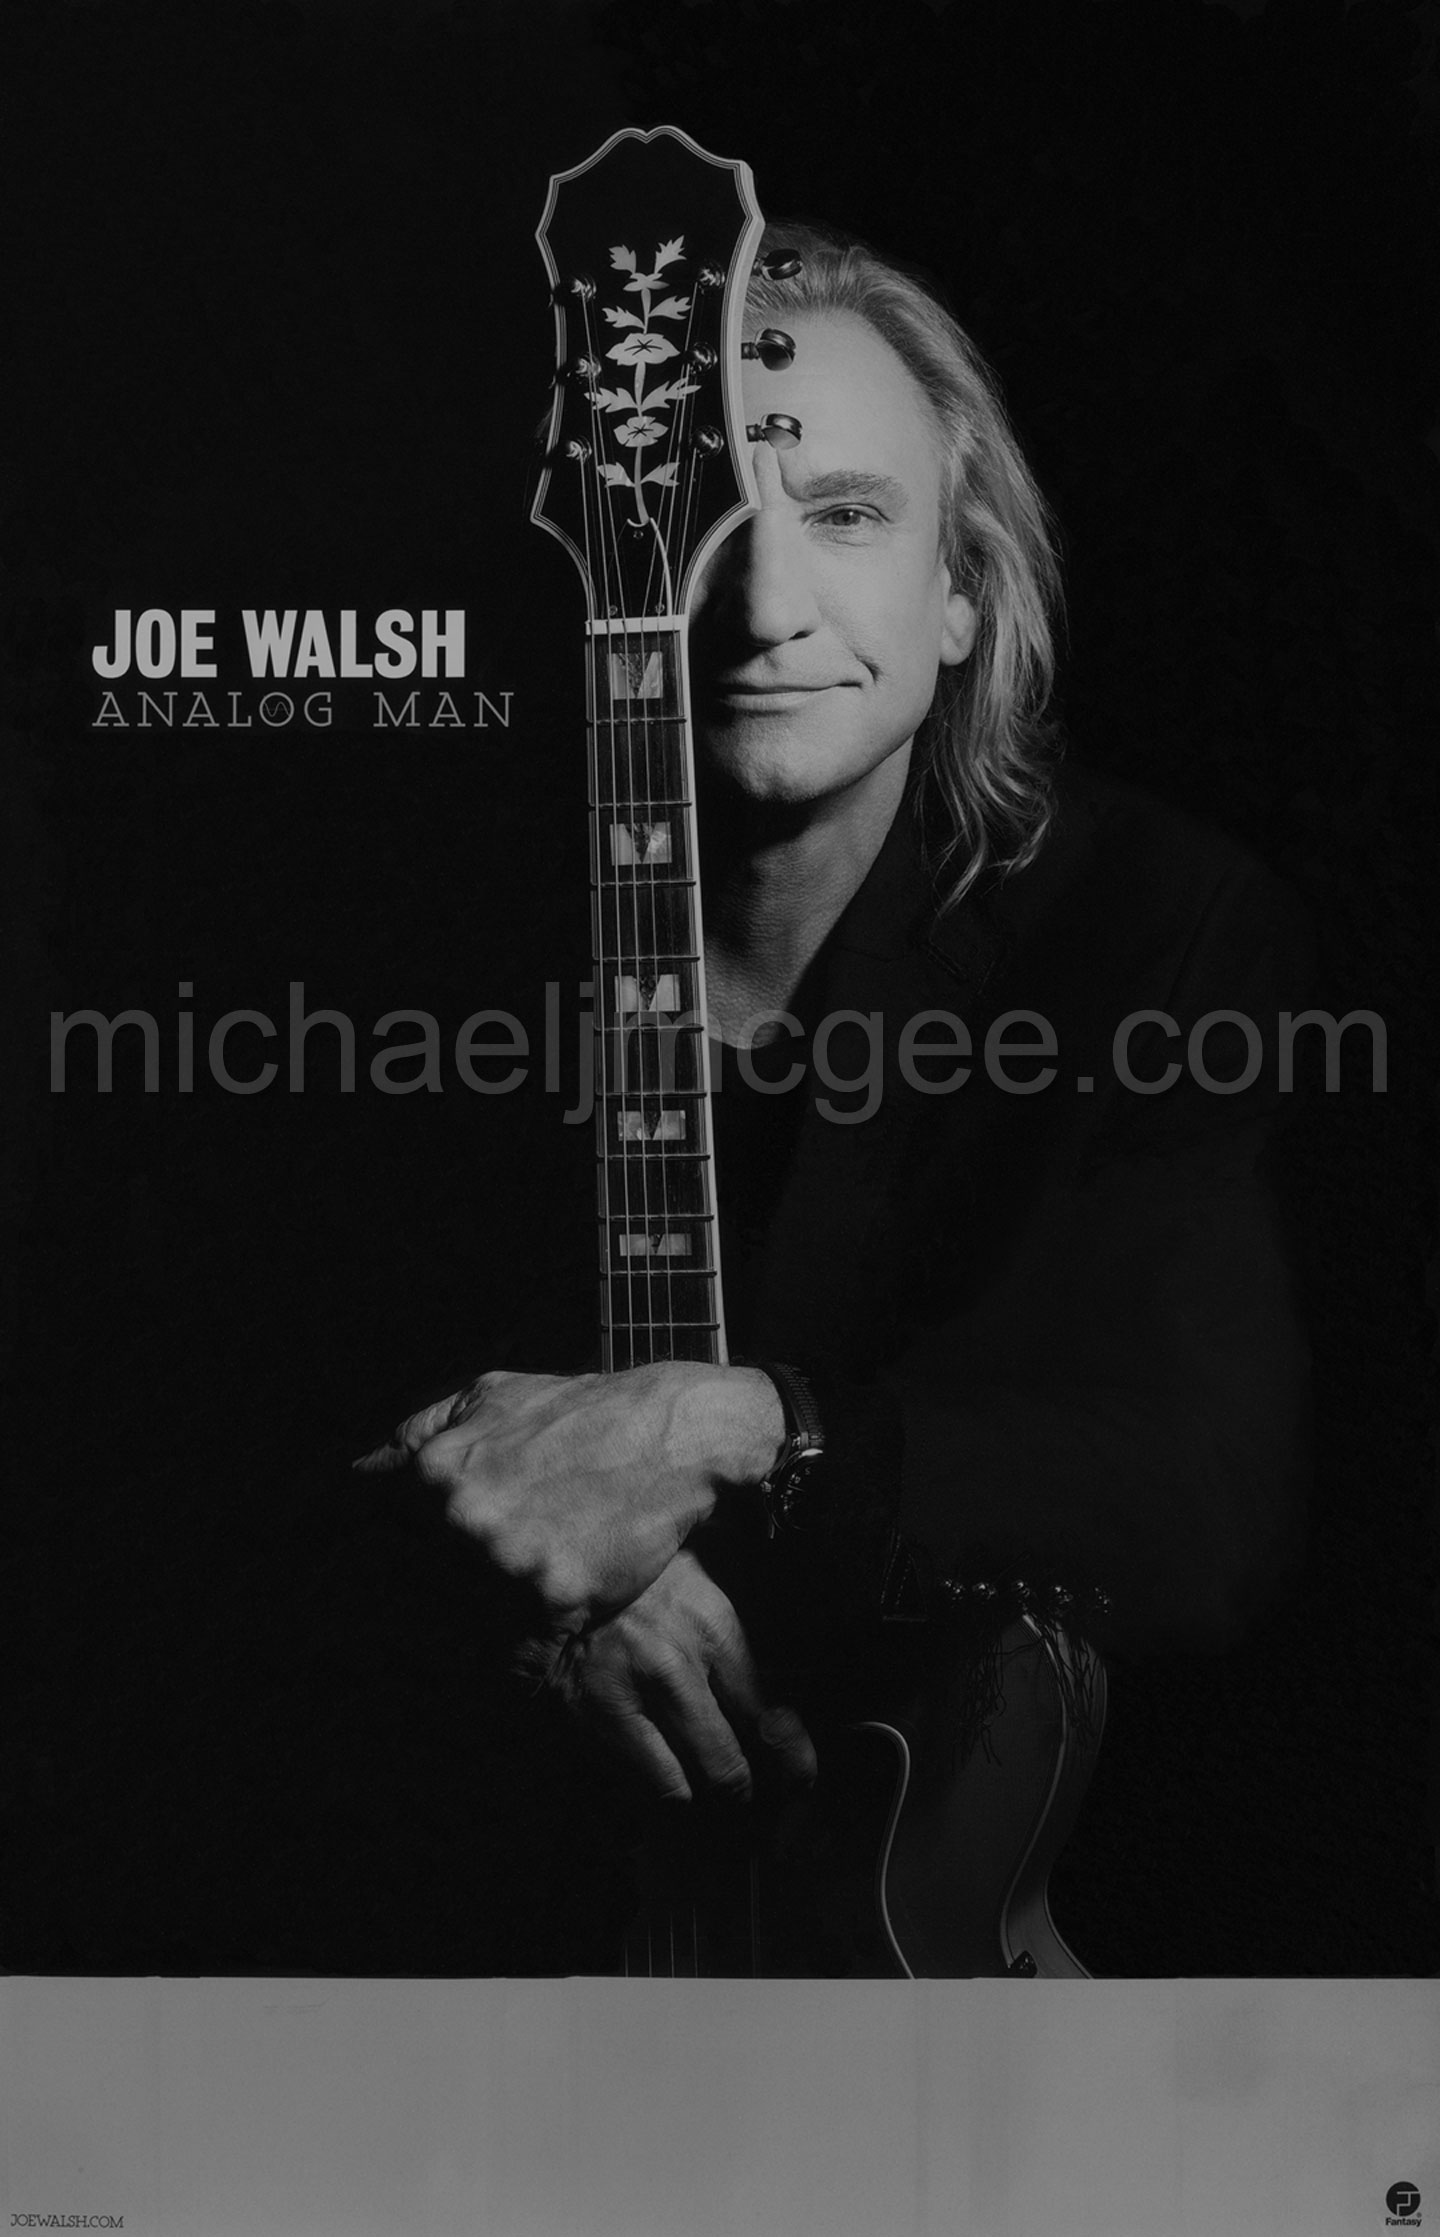 Joe Walsh / michaeljmcgee.com